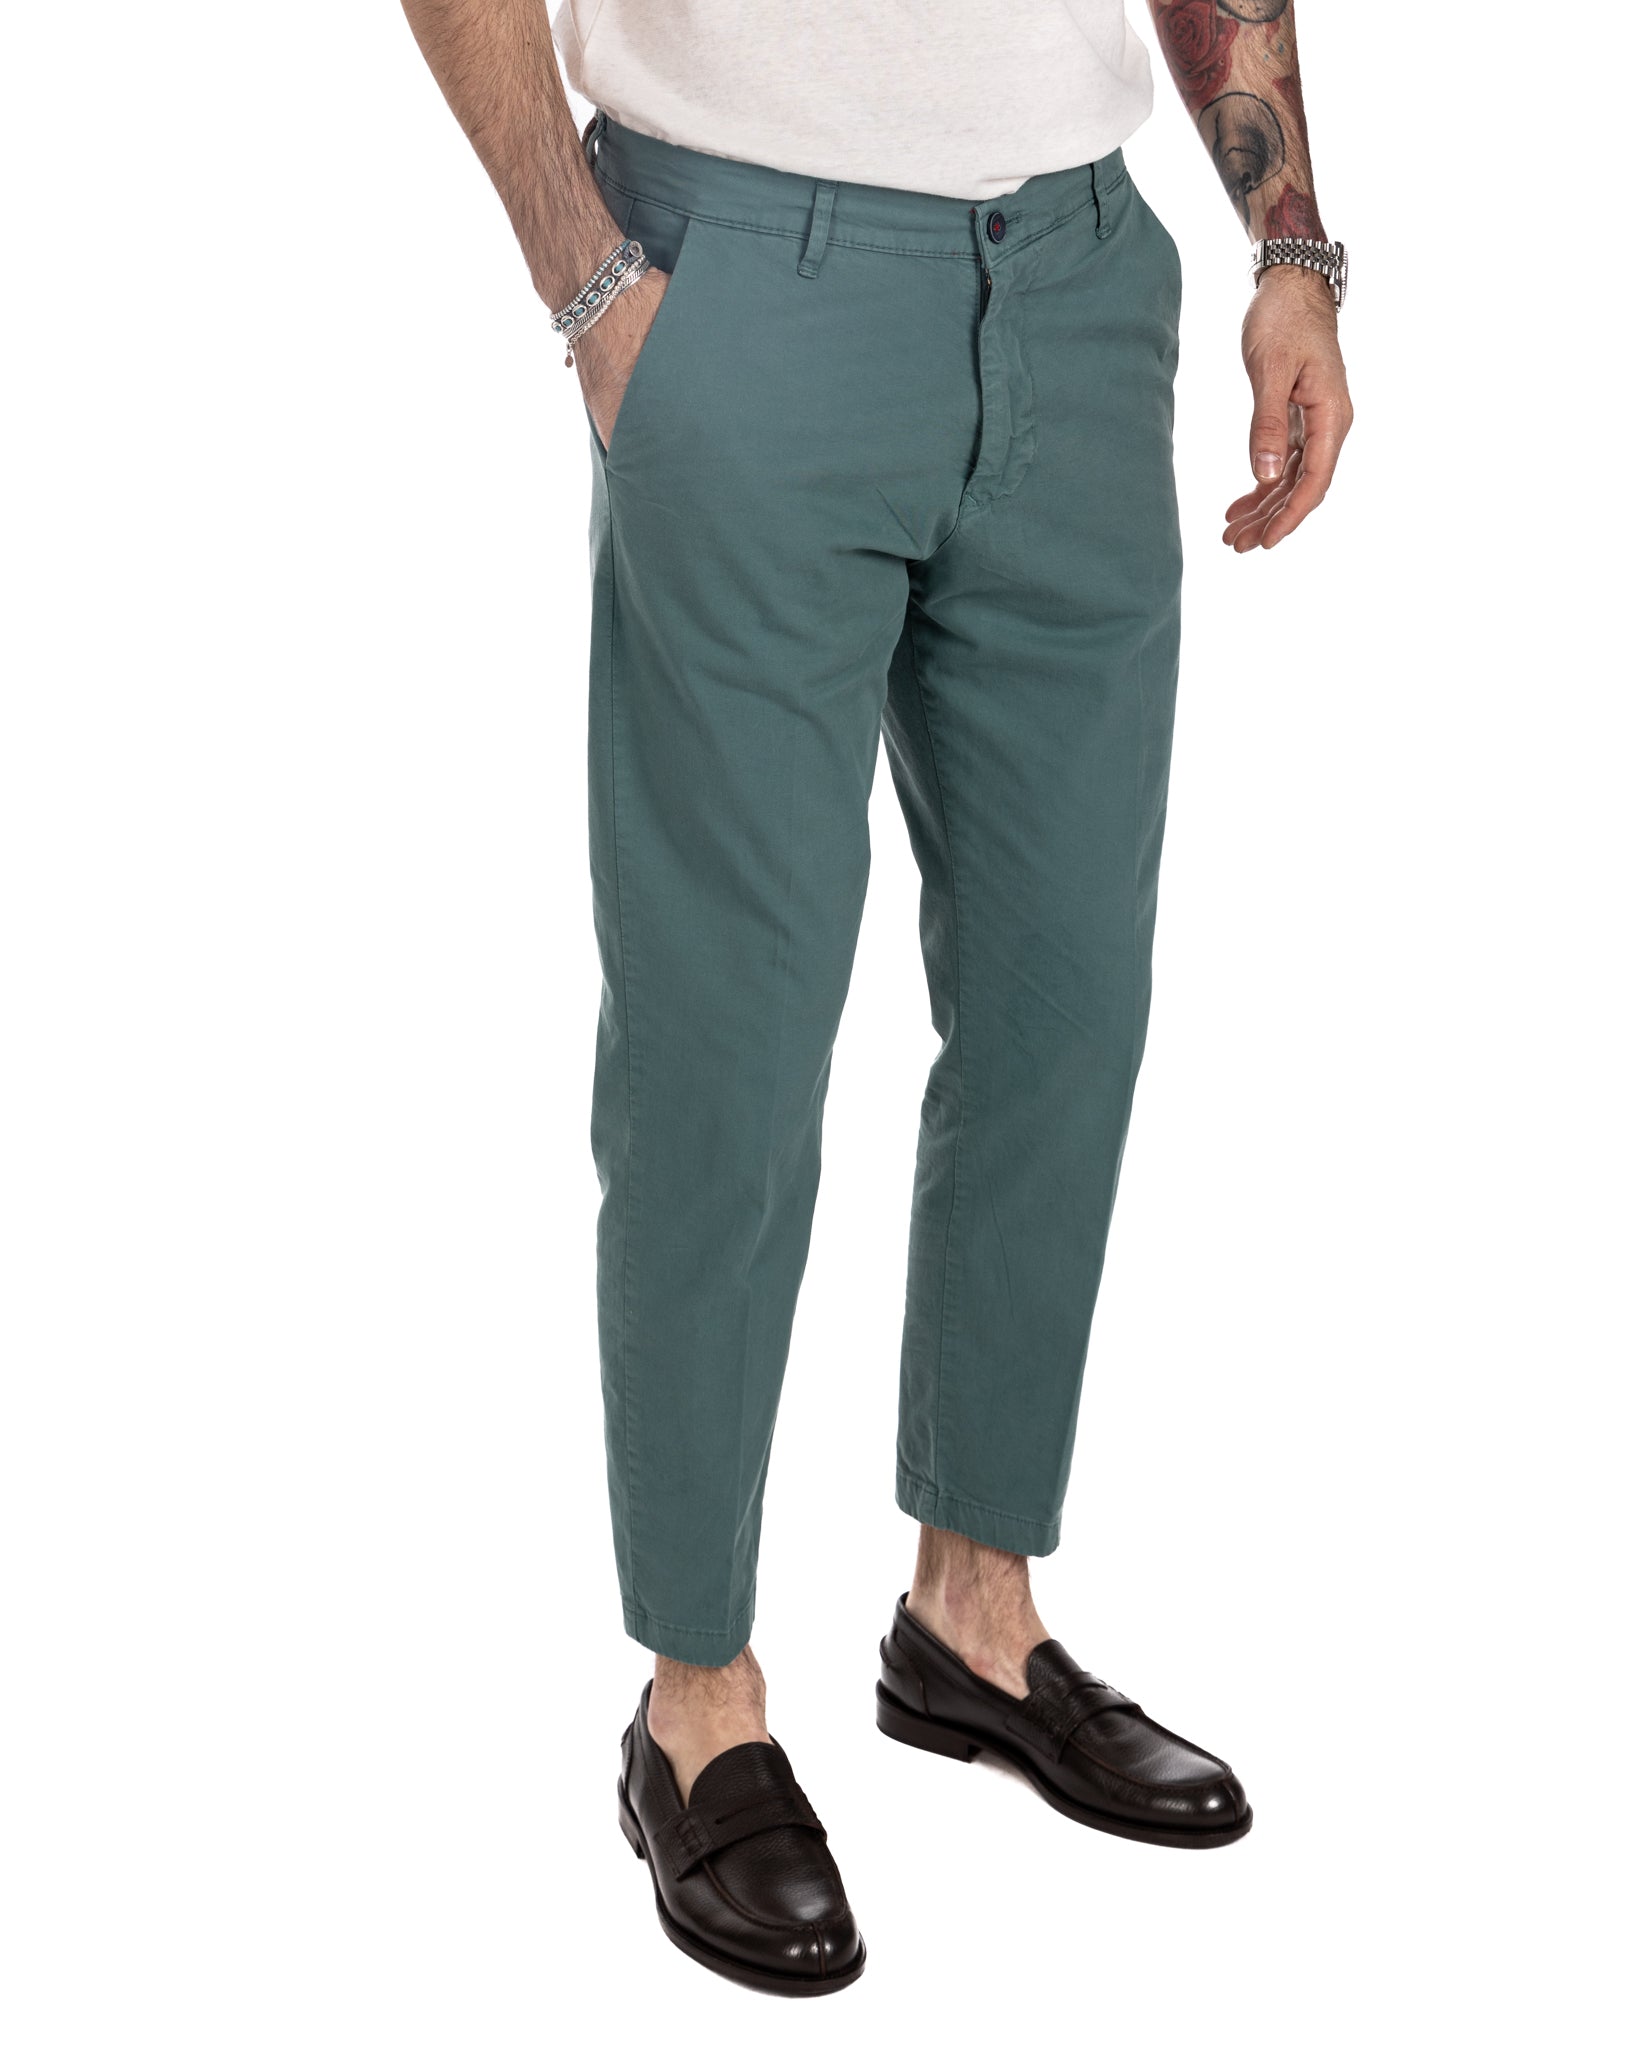 Lauren - green capri trousers